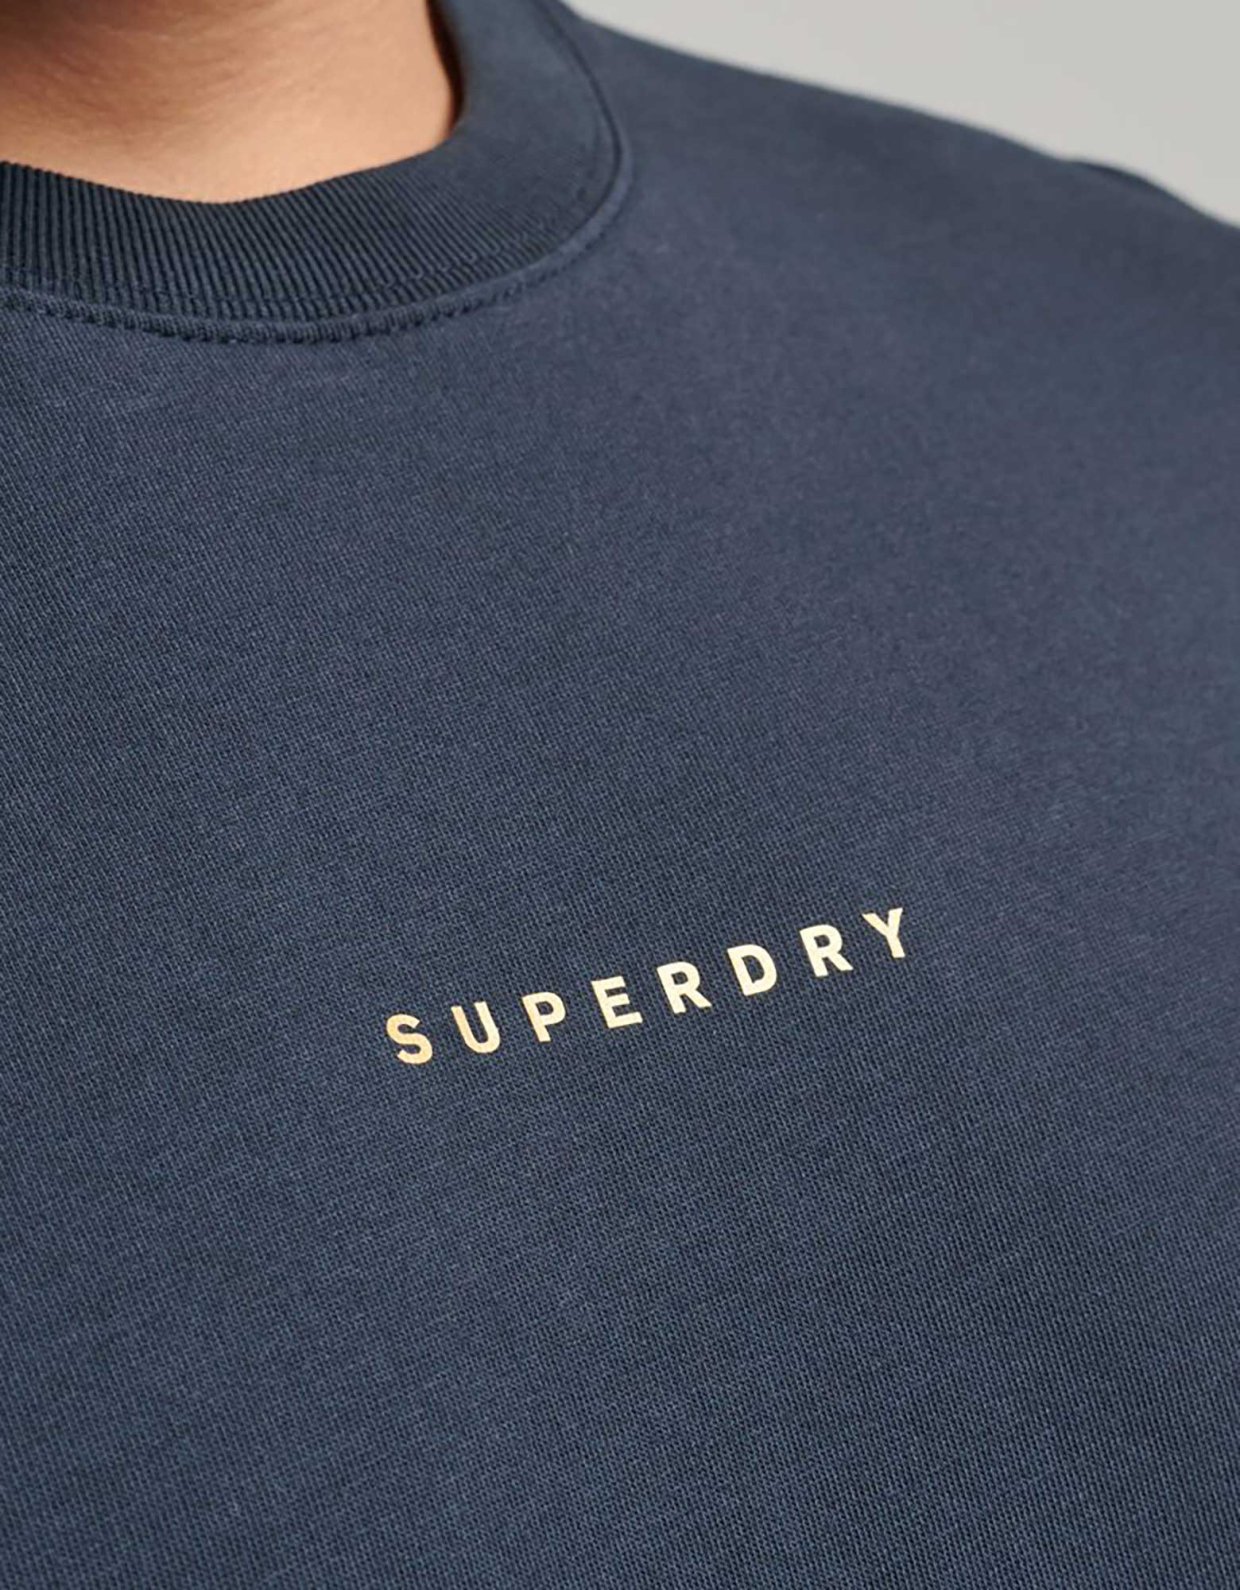 Superdry Code surplus logo tee blueberry